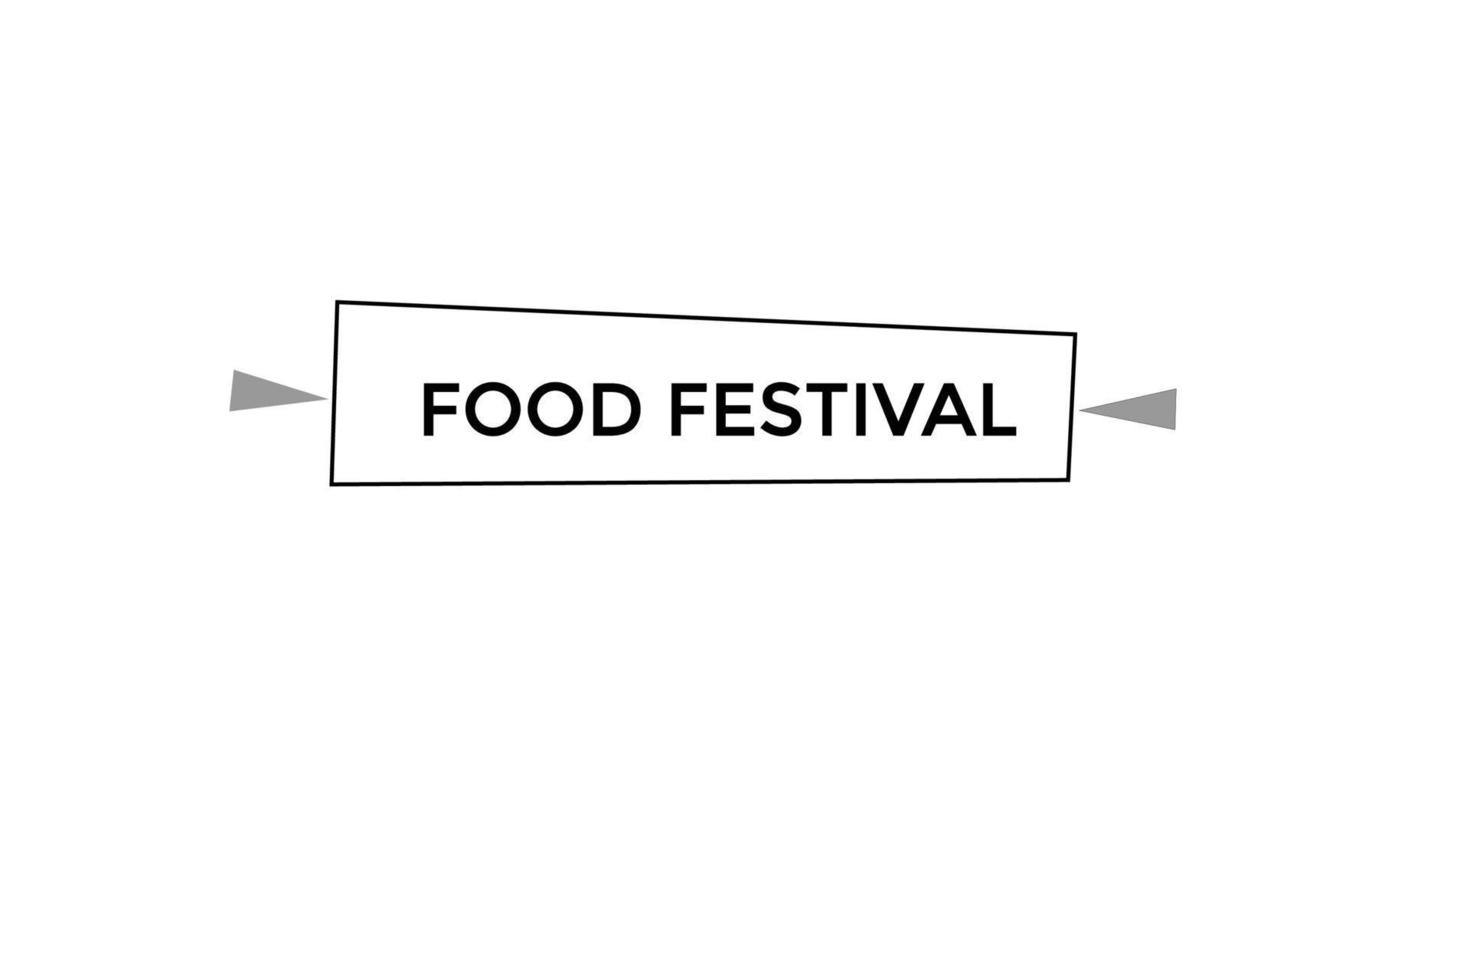 food festival vectors.sign label bubble speech food festival vector